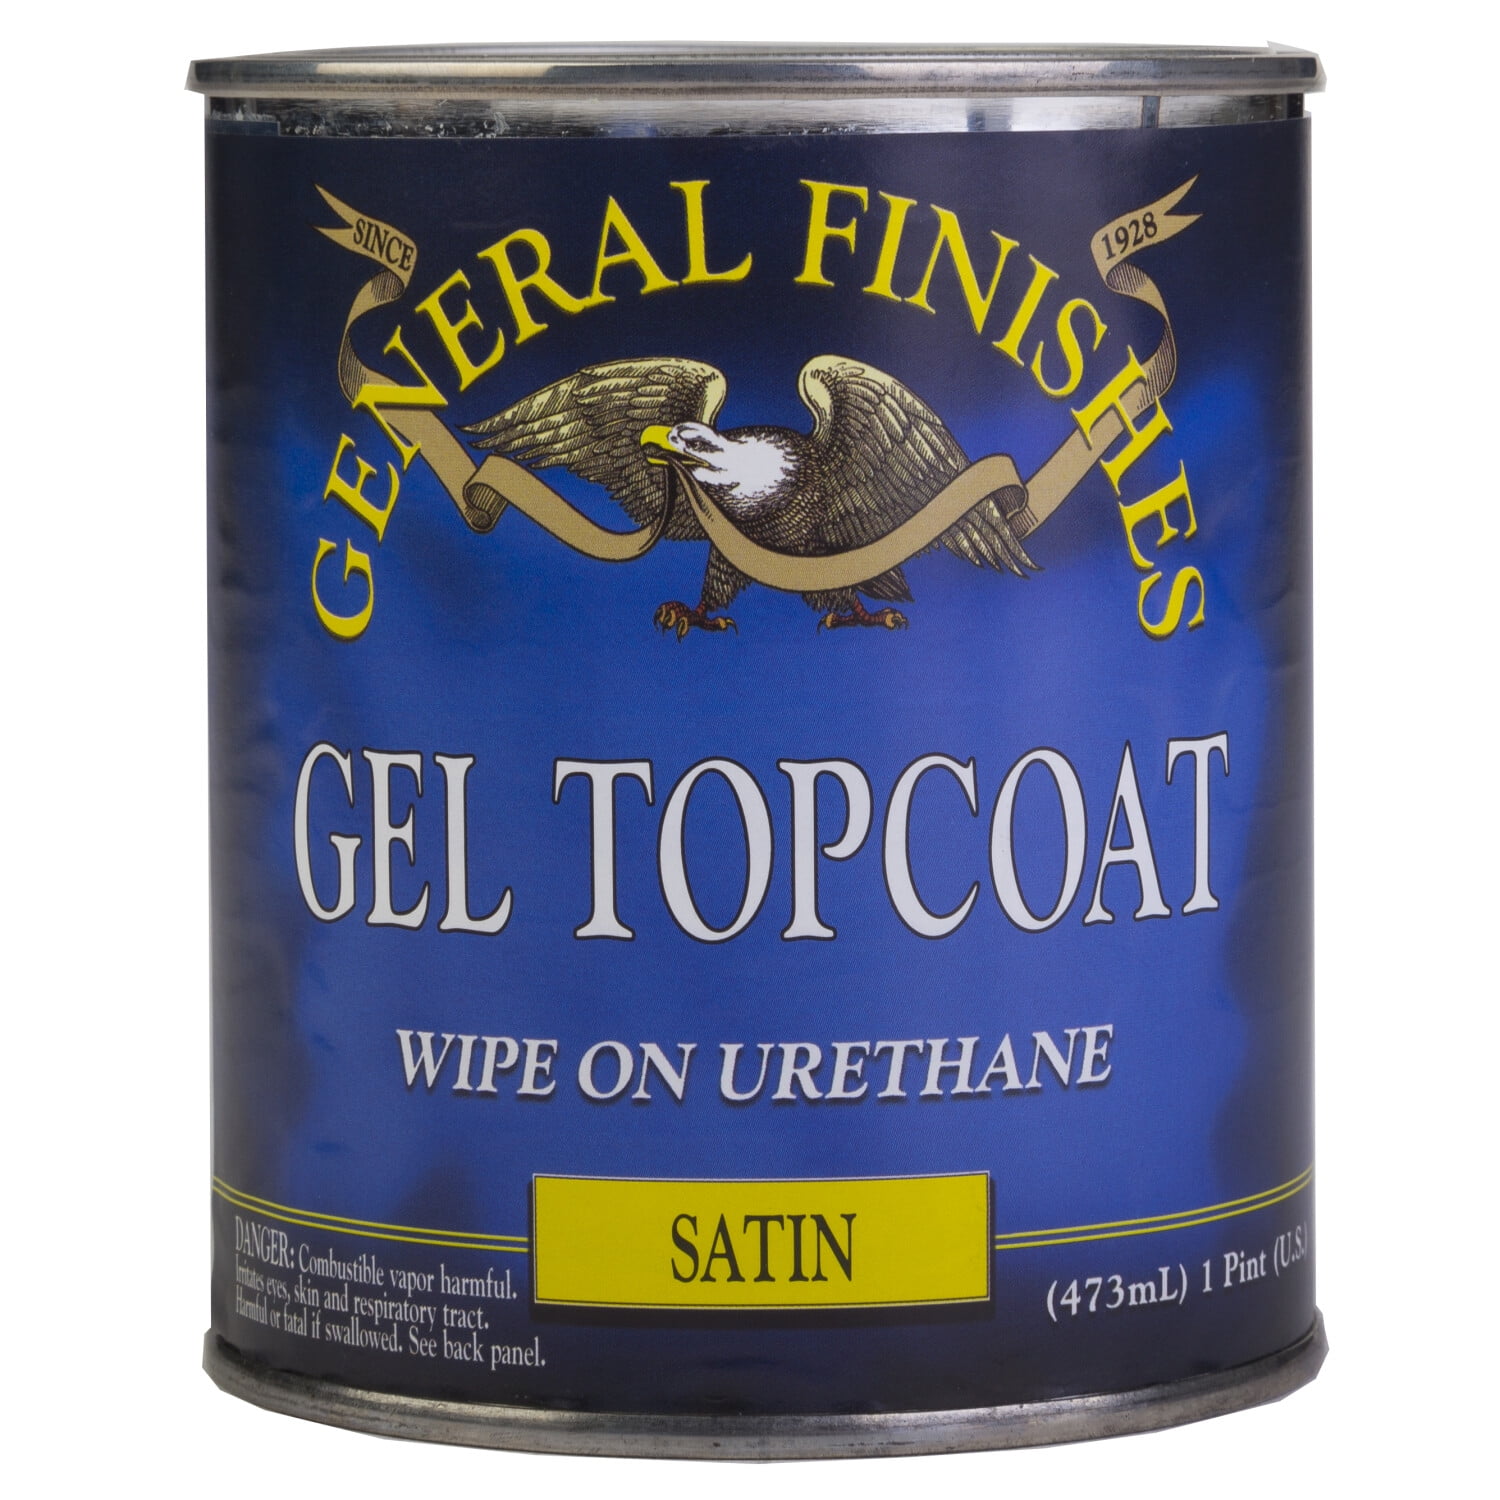 Topcoat Wipe-On Urethane Satin Gel for Gel Stains Protection 1 Quart